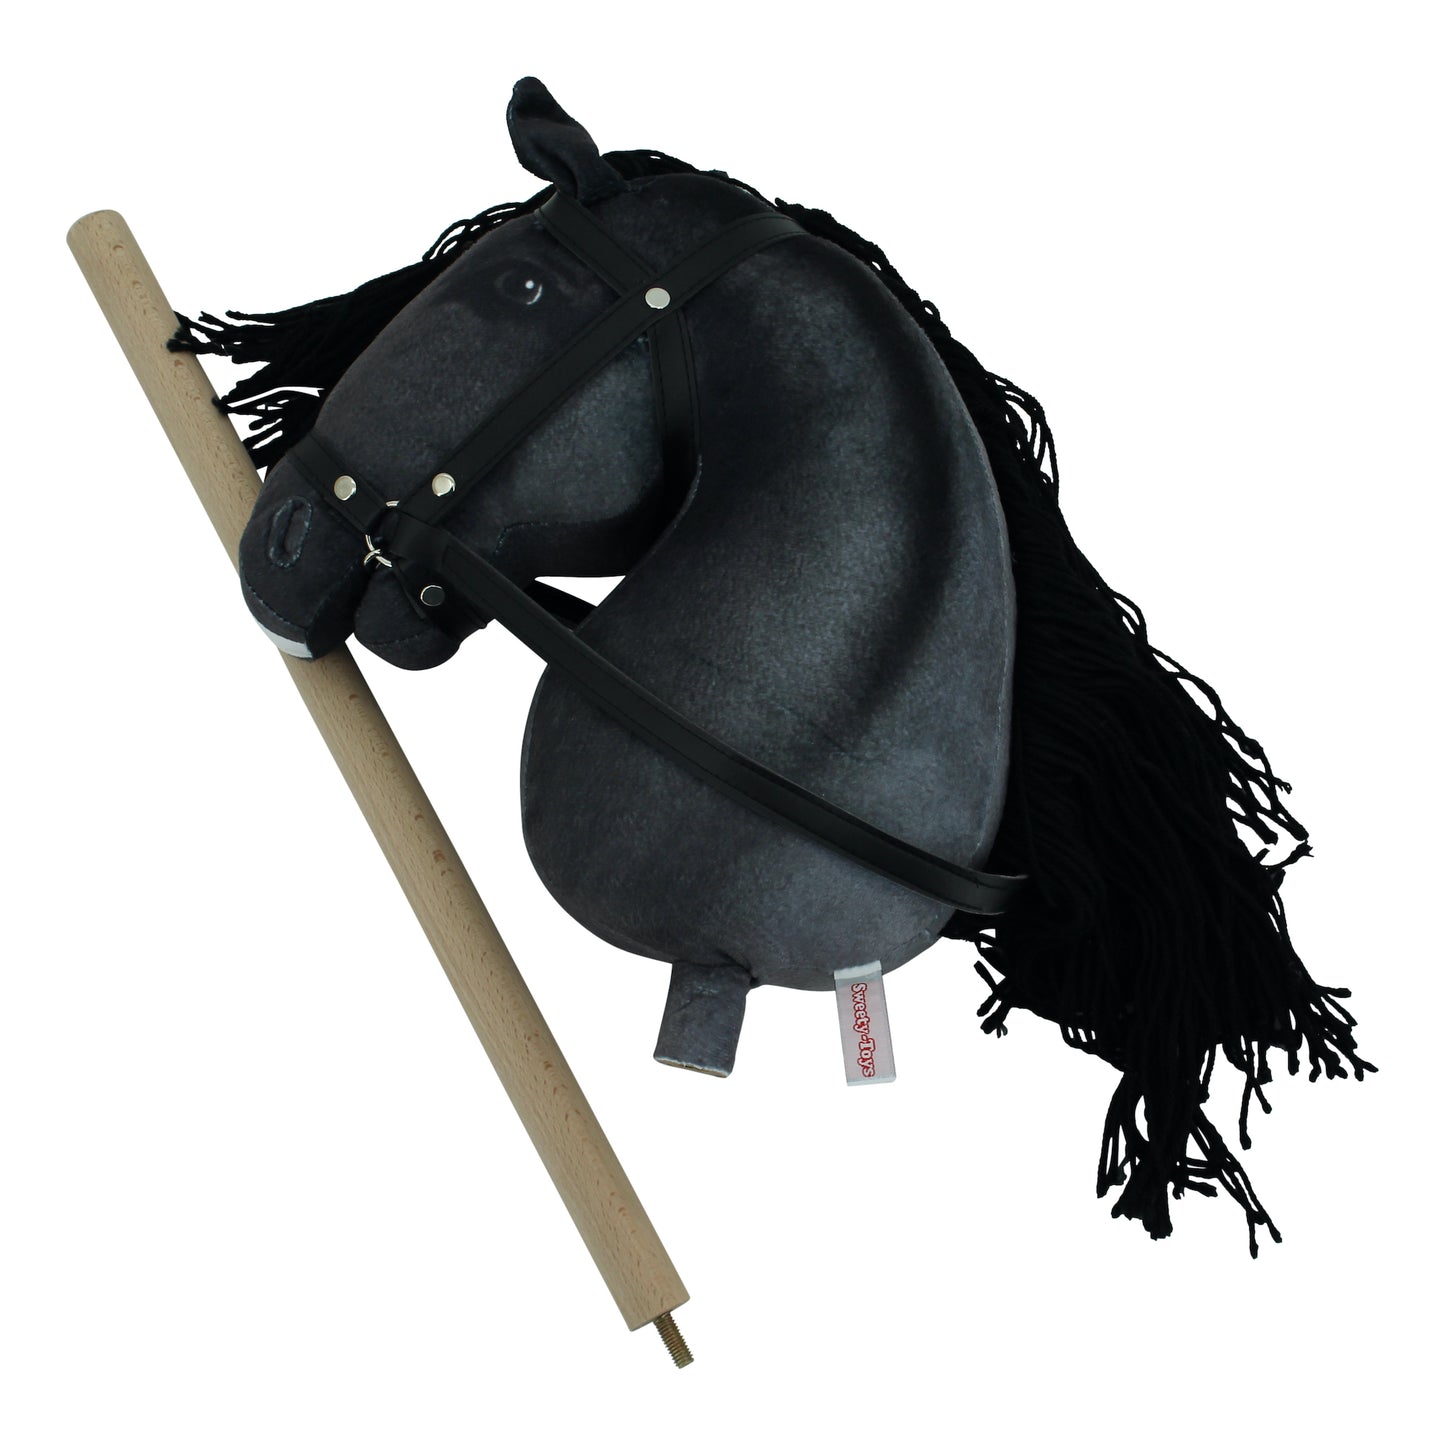 Sweety Toys 14224 Hobbyhorse Hobby horse senza ruote adatto per tornei di hobbistica